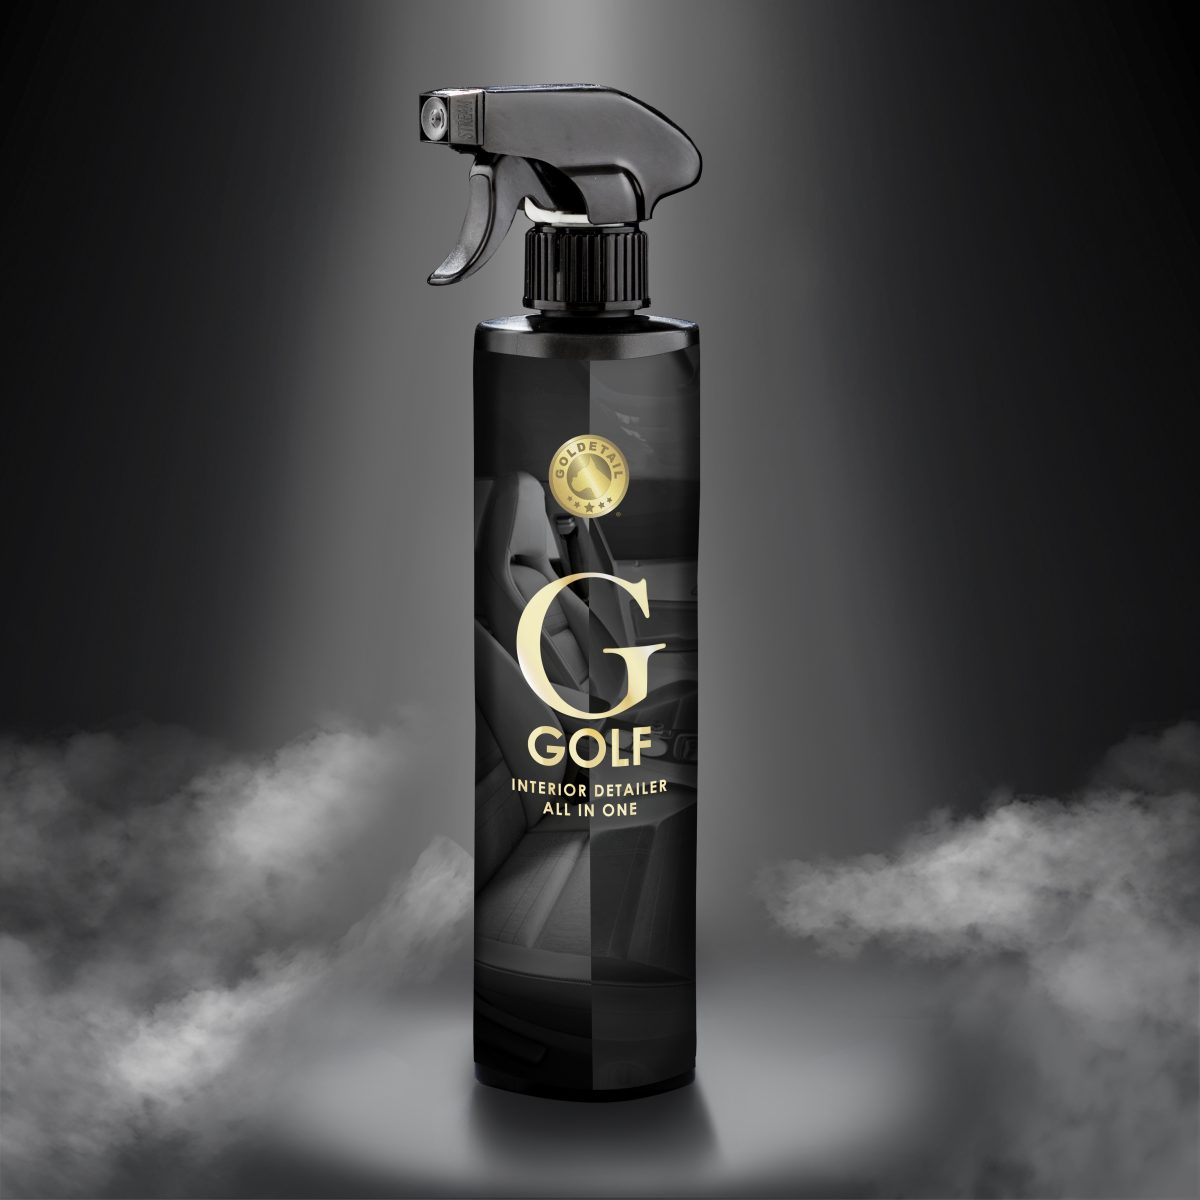 Bottle of Golf Interior Detailer all in one